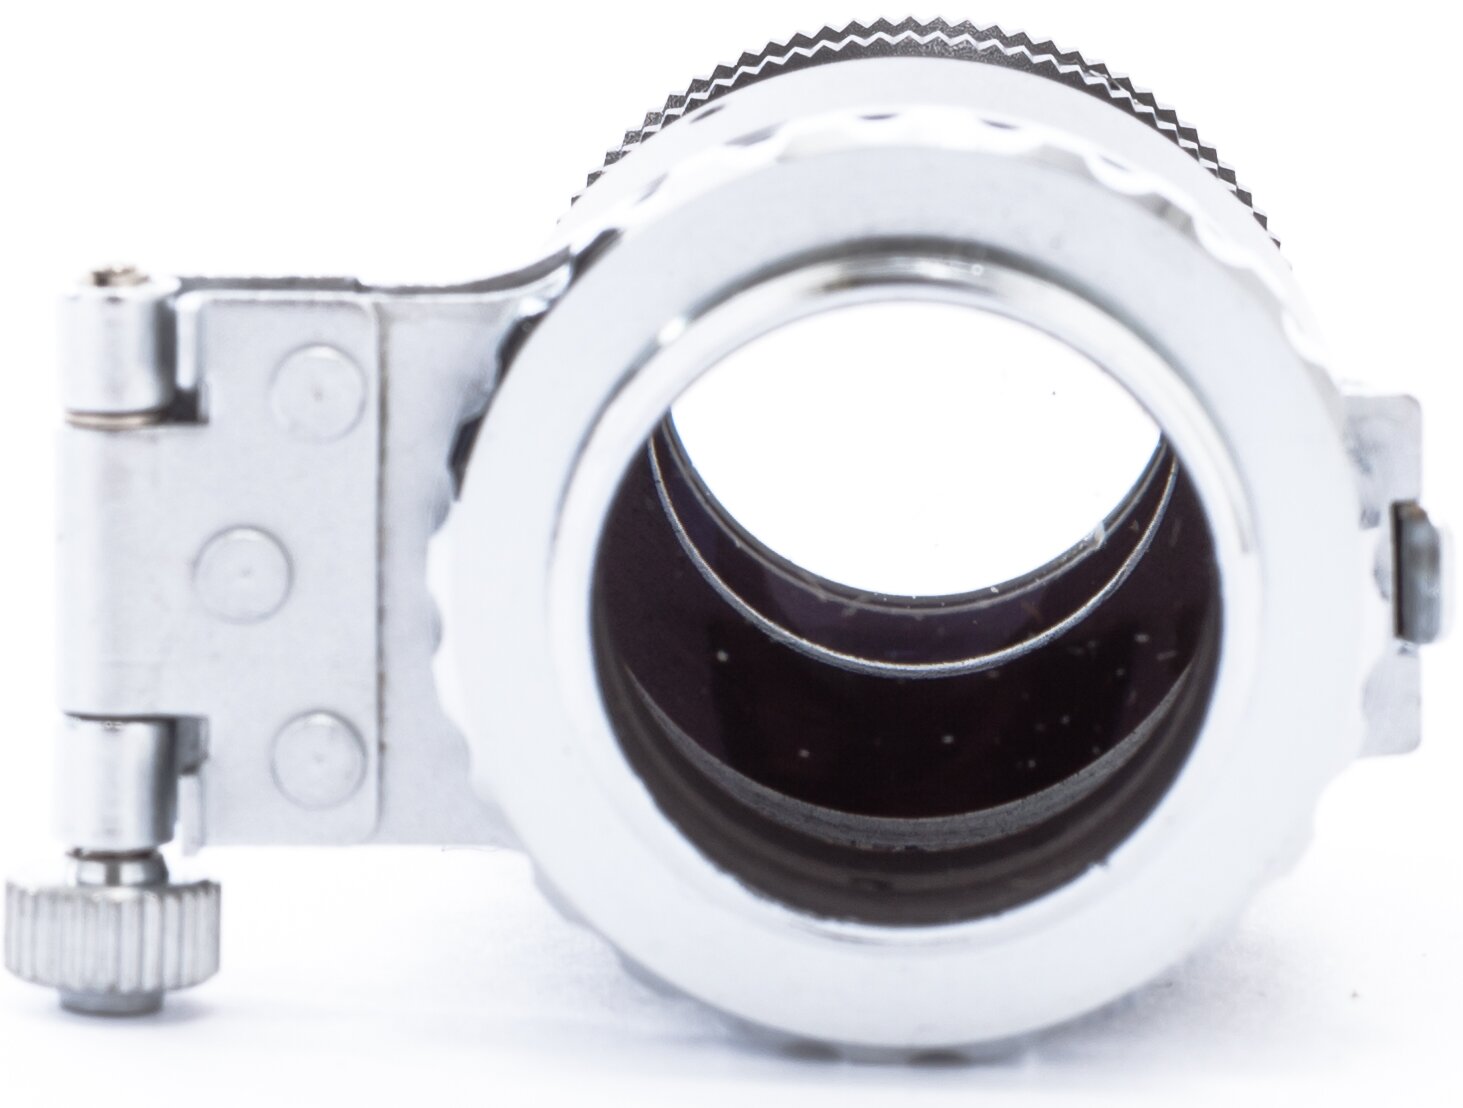 Nikon F Eyepiece magnifier